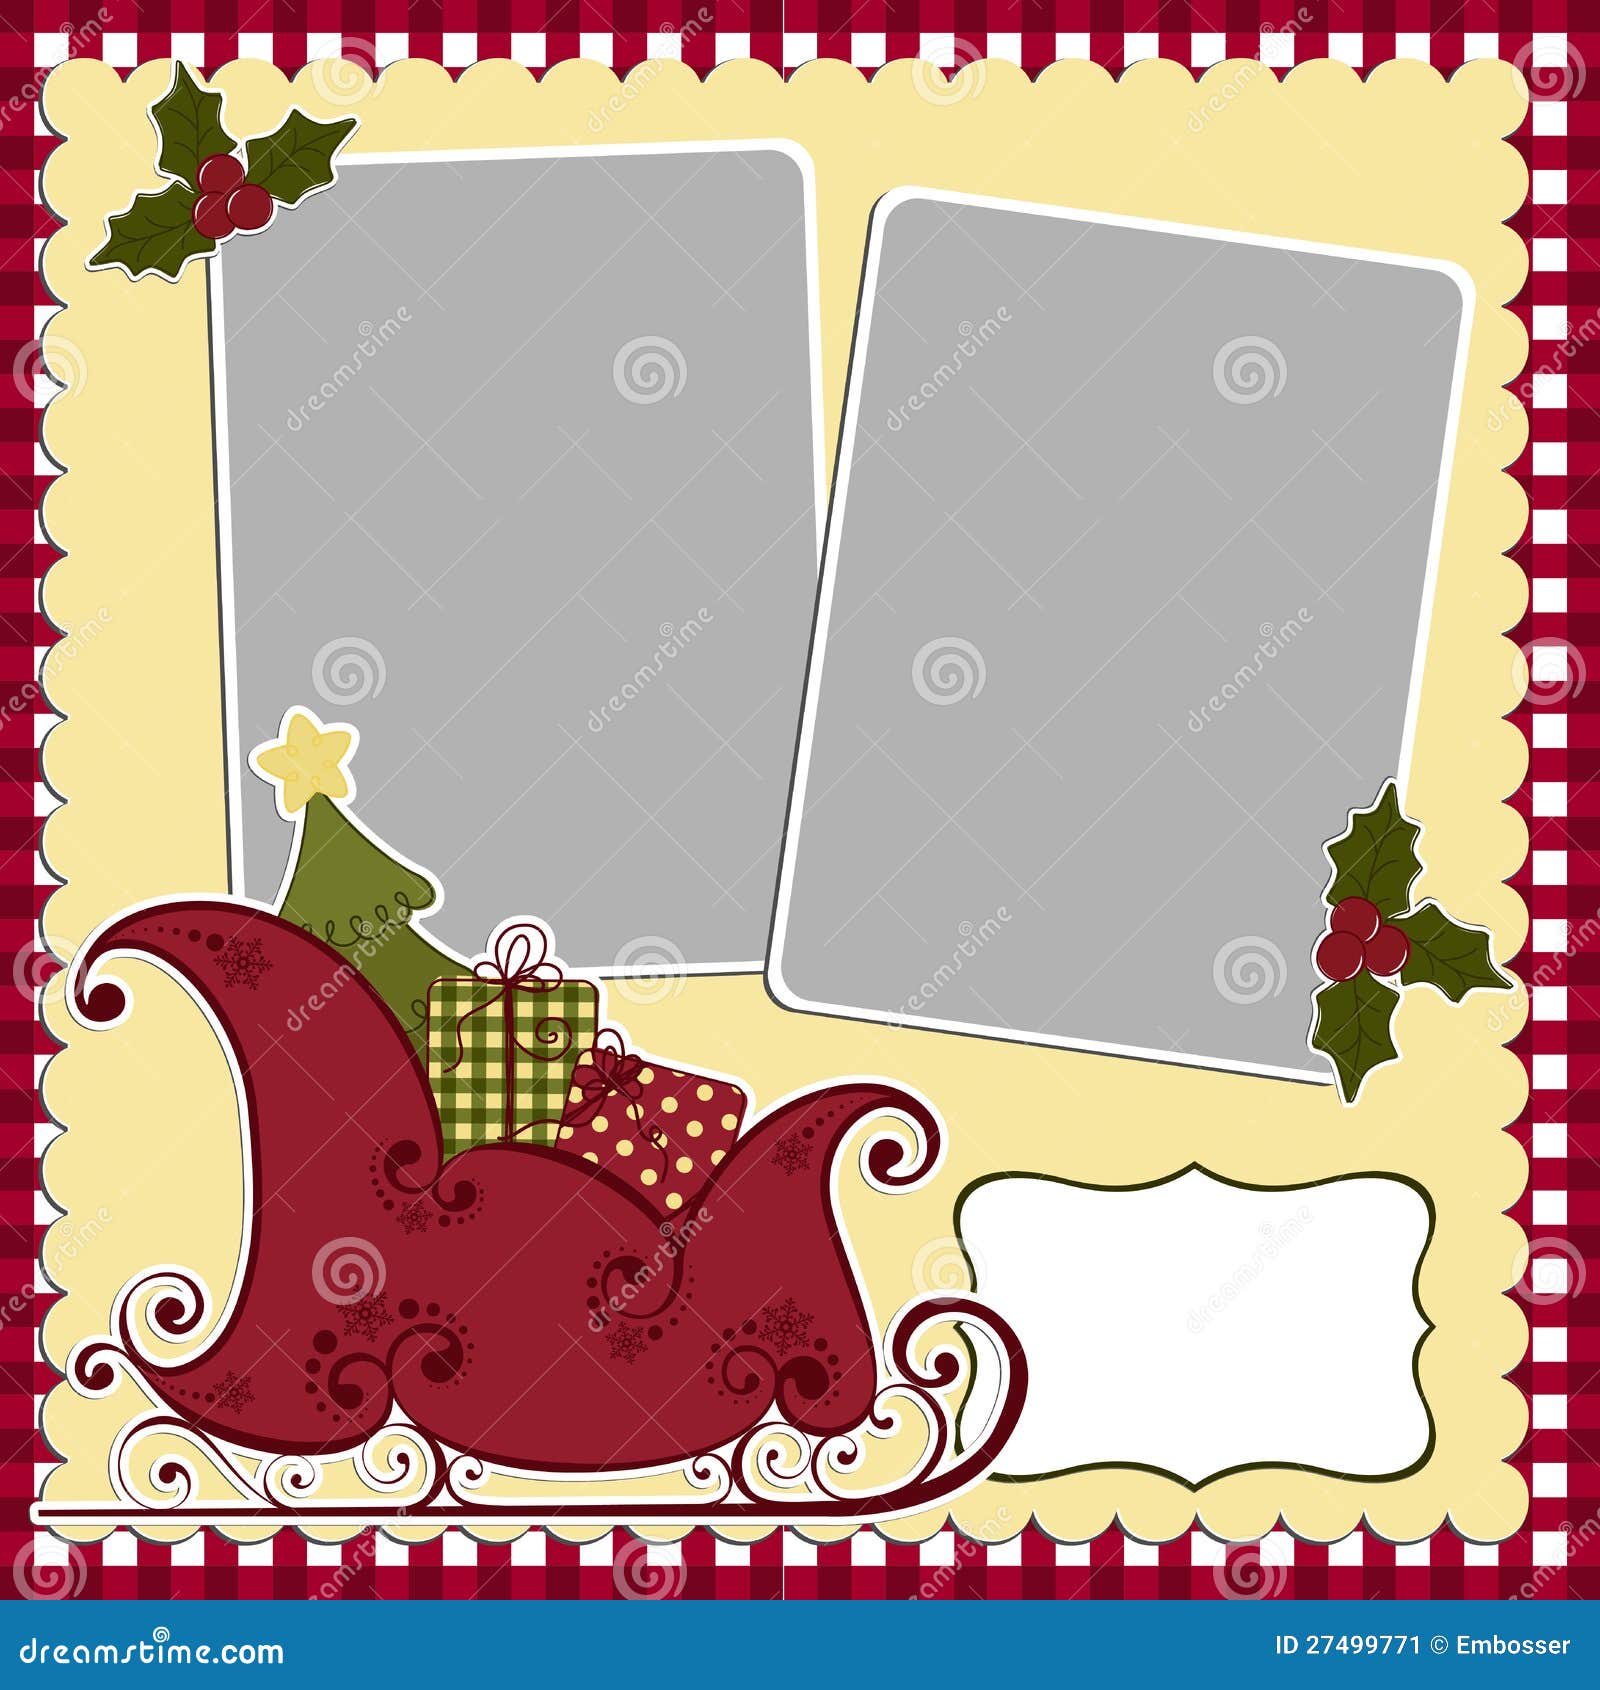 Cute Christmas Frame Template Stock Image Image 27499771